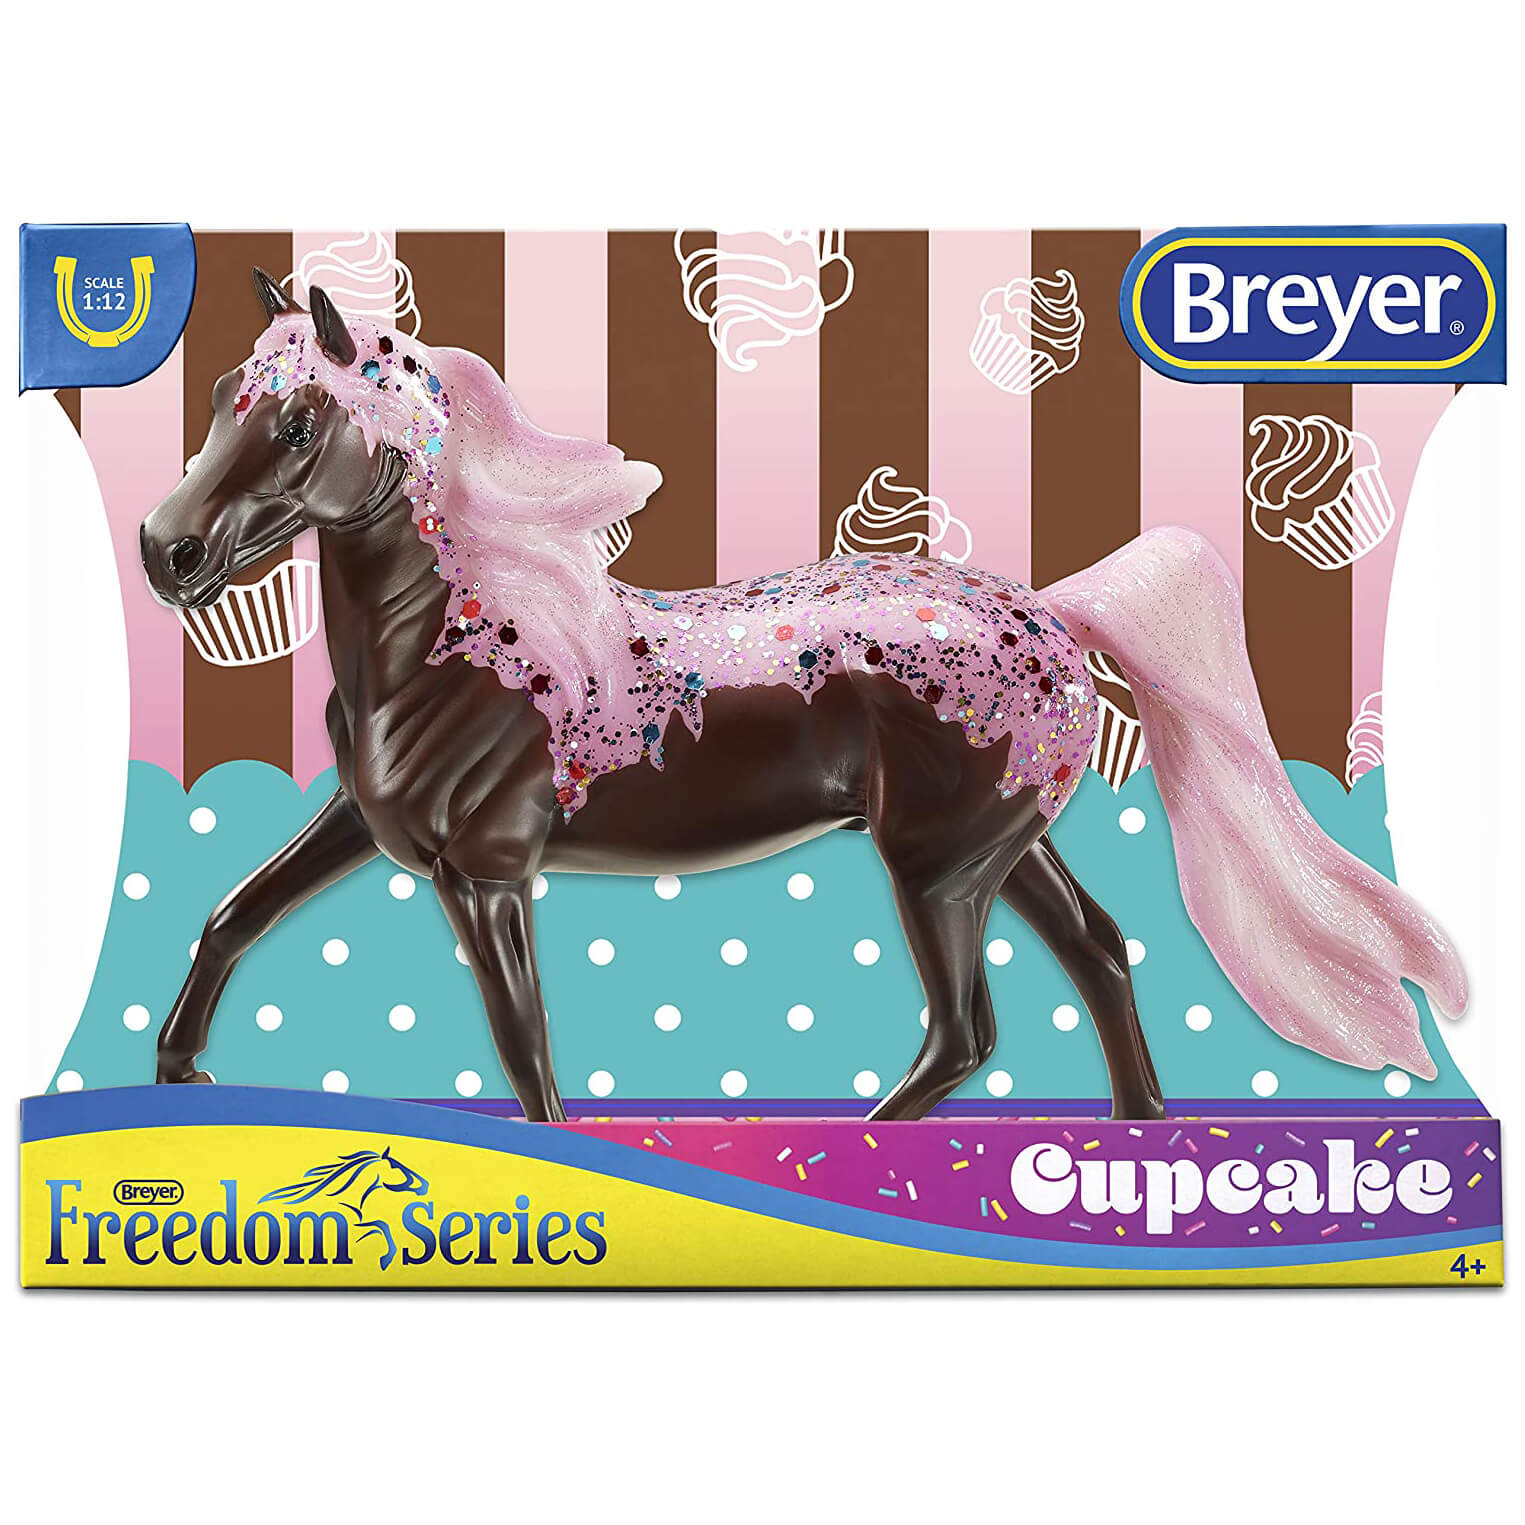 Breyer Freedom Series Cupcake